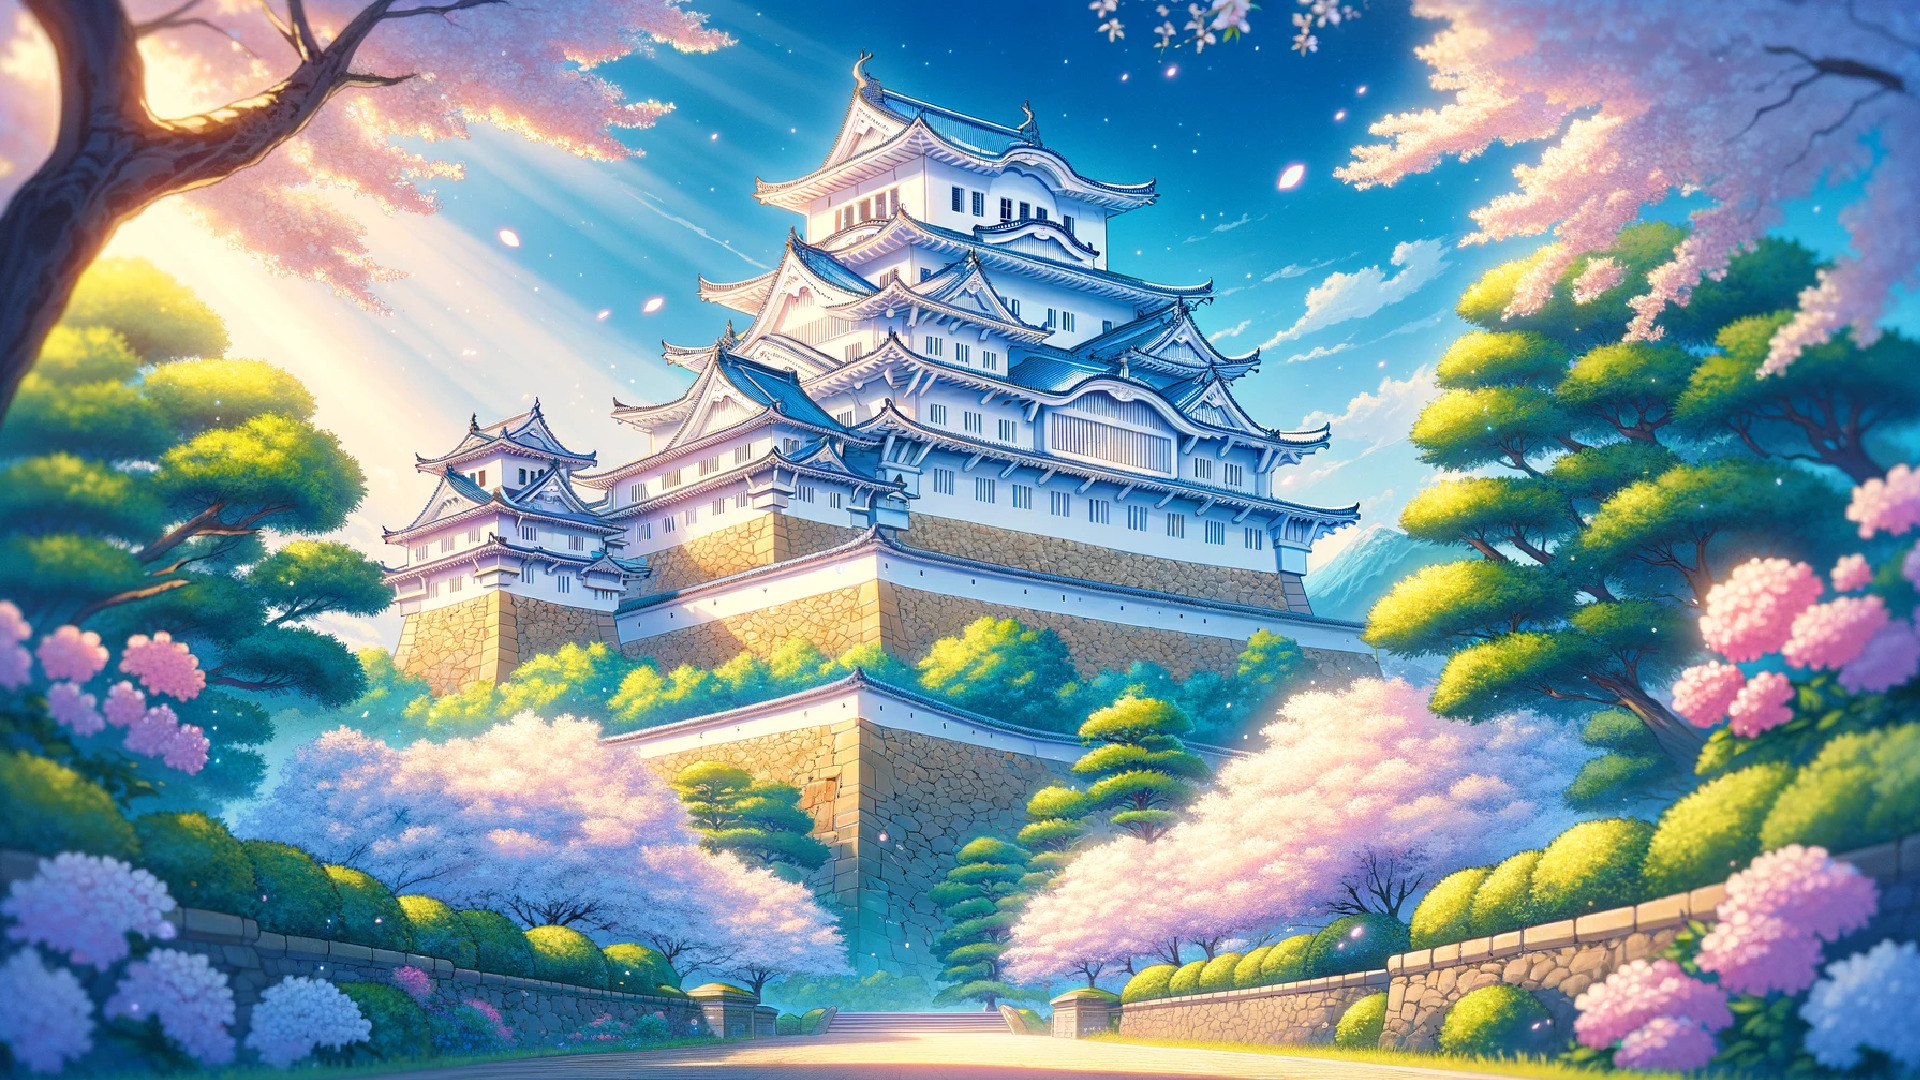 Studio Ghibli Laputa Castle in the Sky Original Animation Cel Painting Anime  – Disney Animation, Simpsons, Warner Bros, Futurama and more